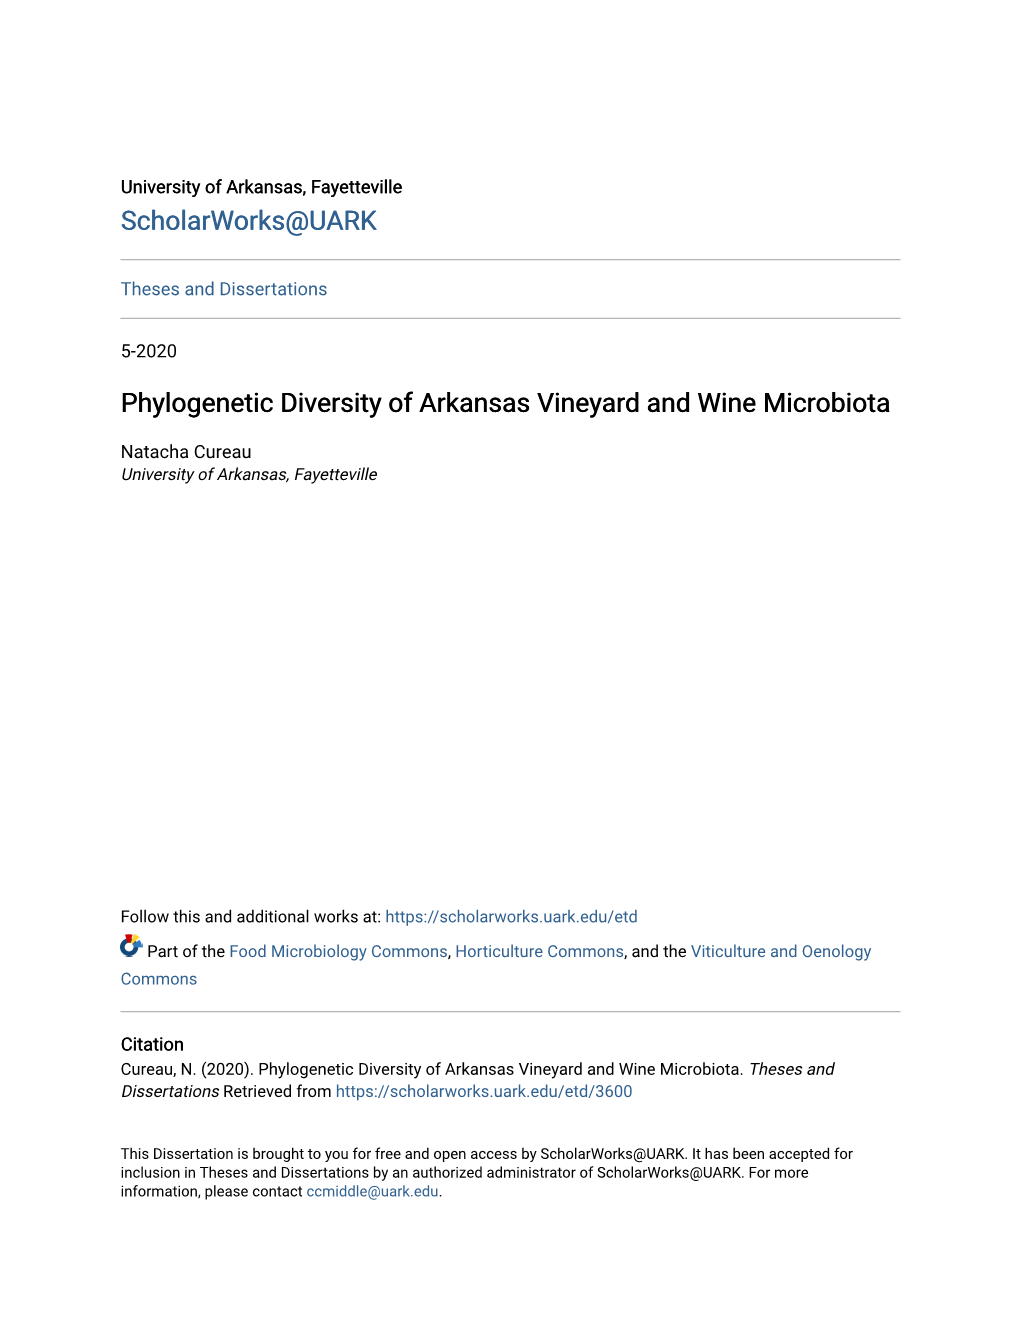 Phylogenetic Diversity of Arkansas Vineyard and Wine Microbiota